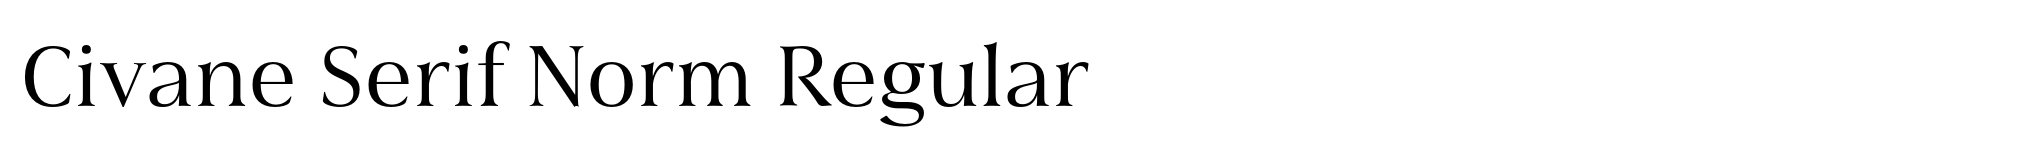 Civane Serif Norm Regular image